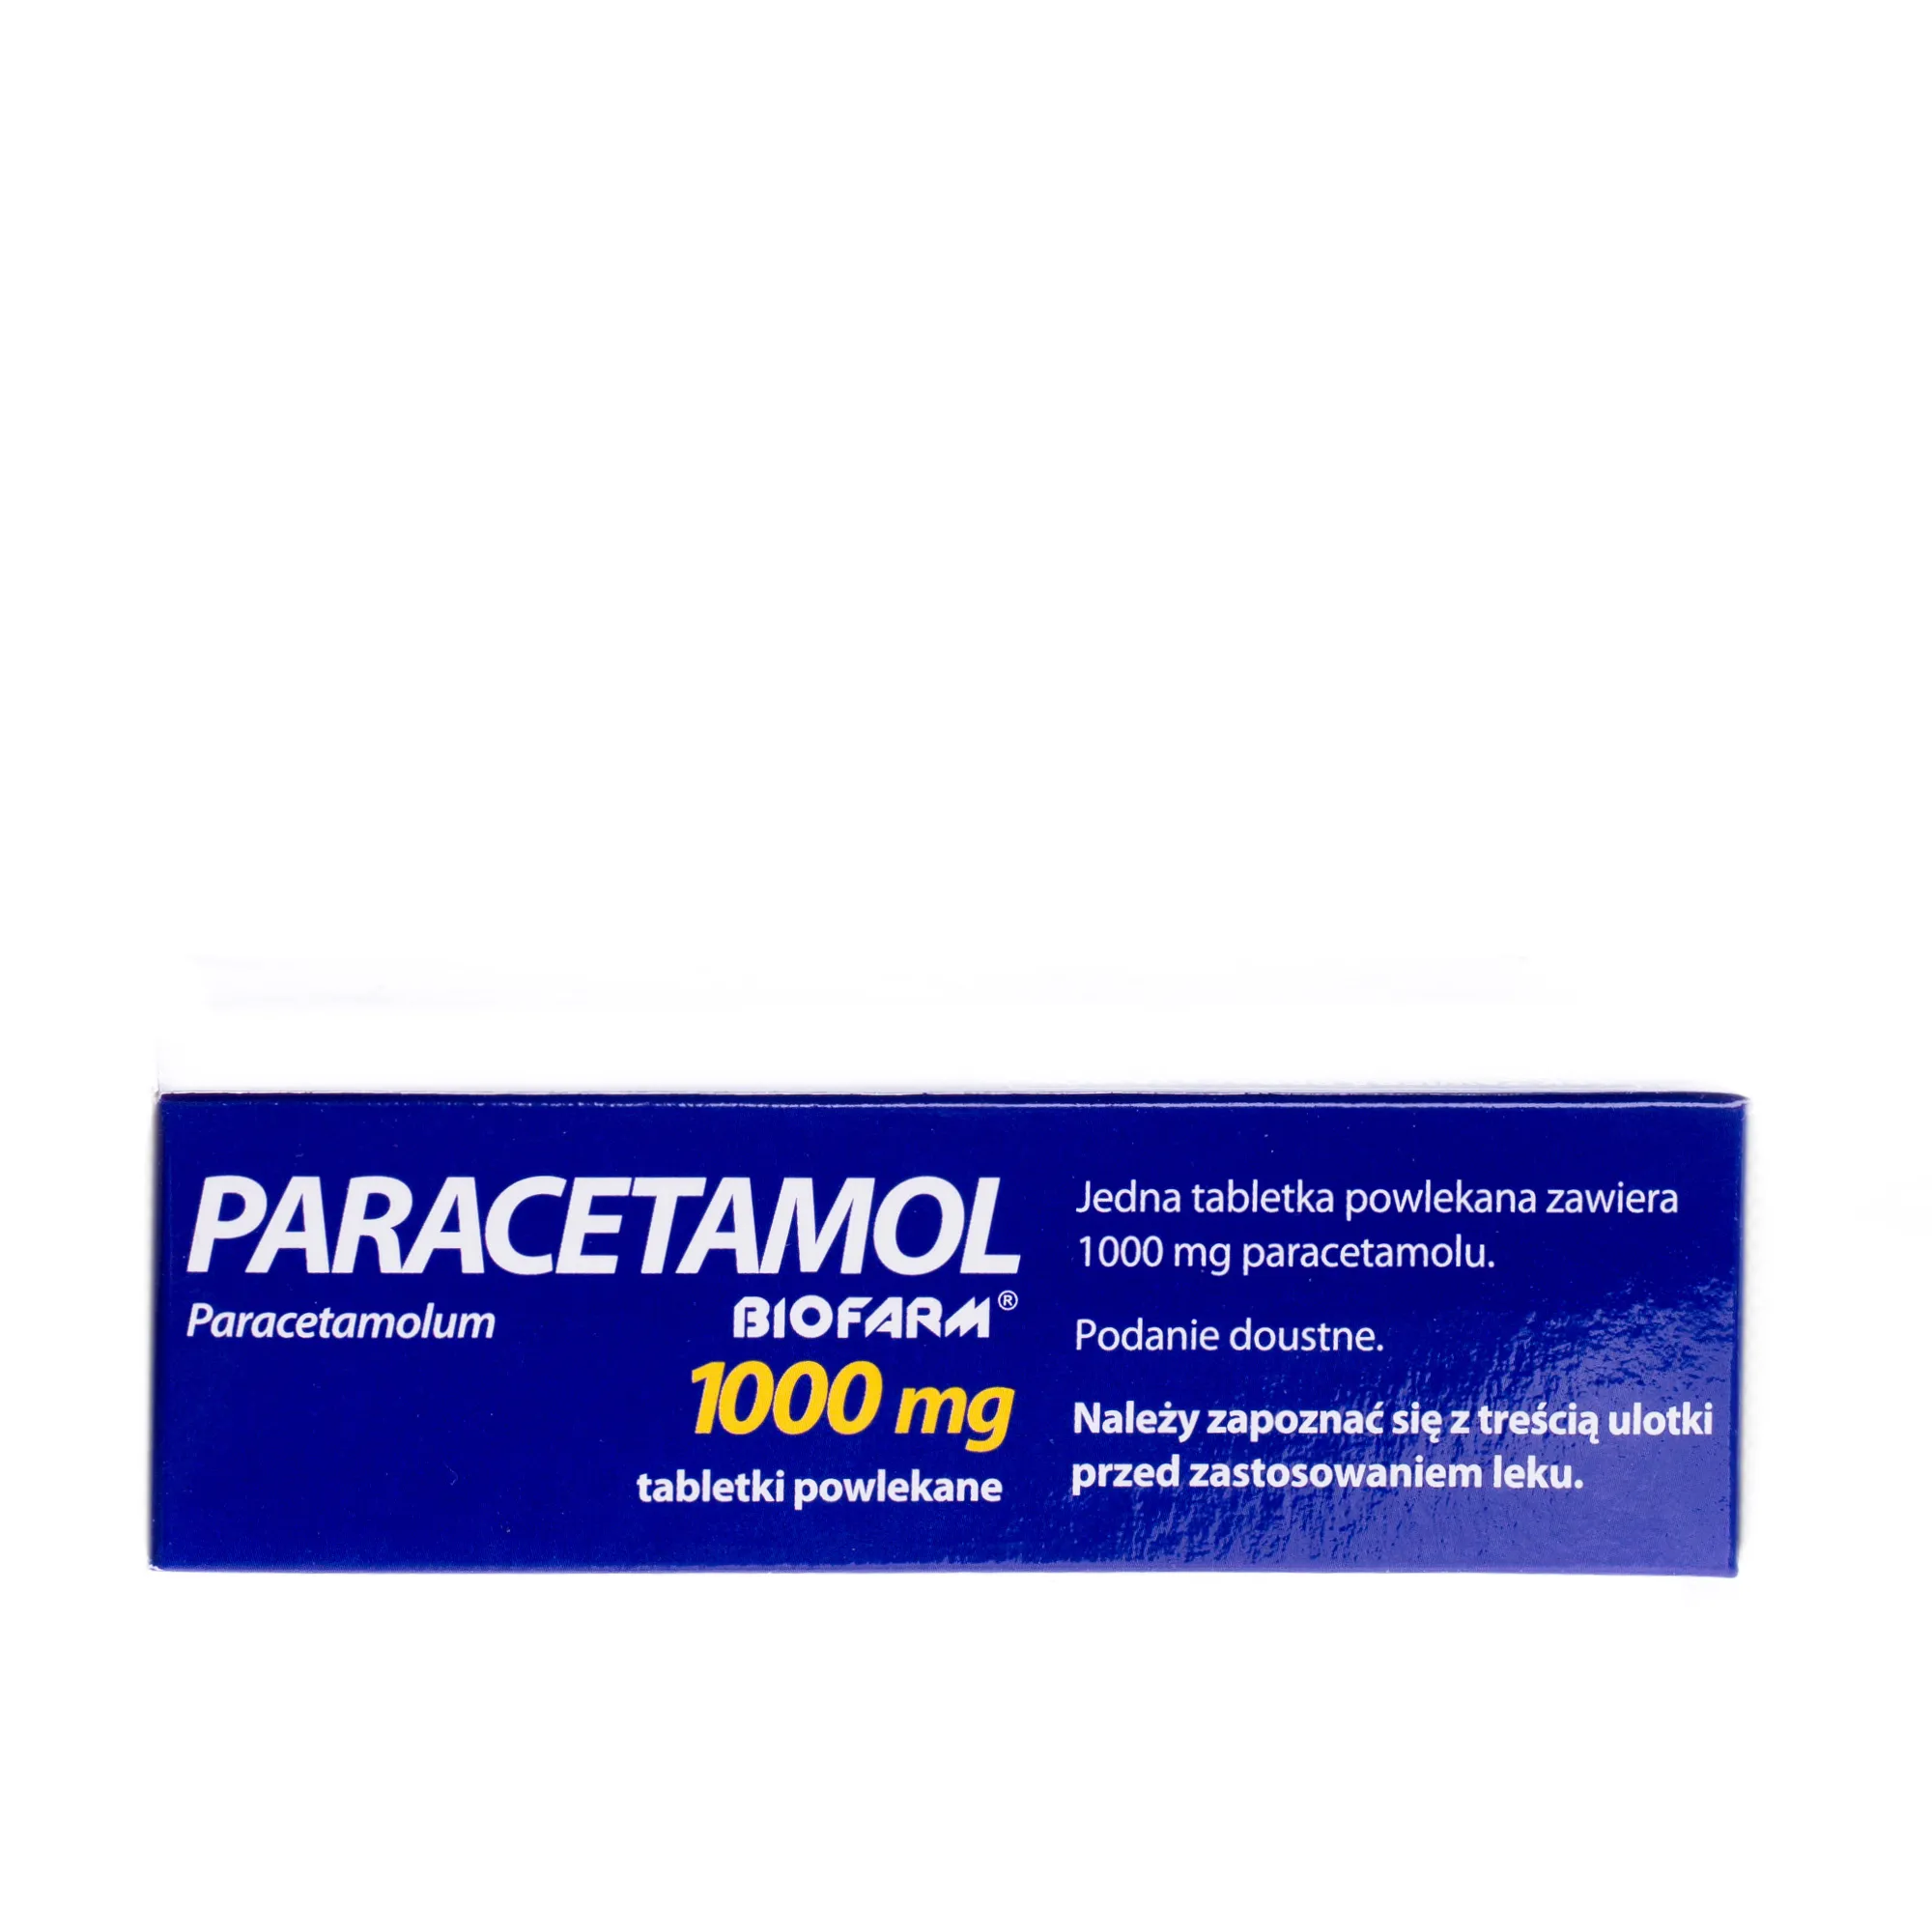 Paracetamol  Biofarm 1000 mg, 10 tabletek powlekanych 